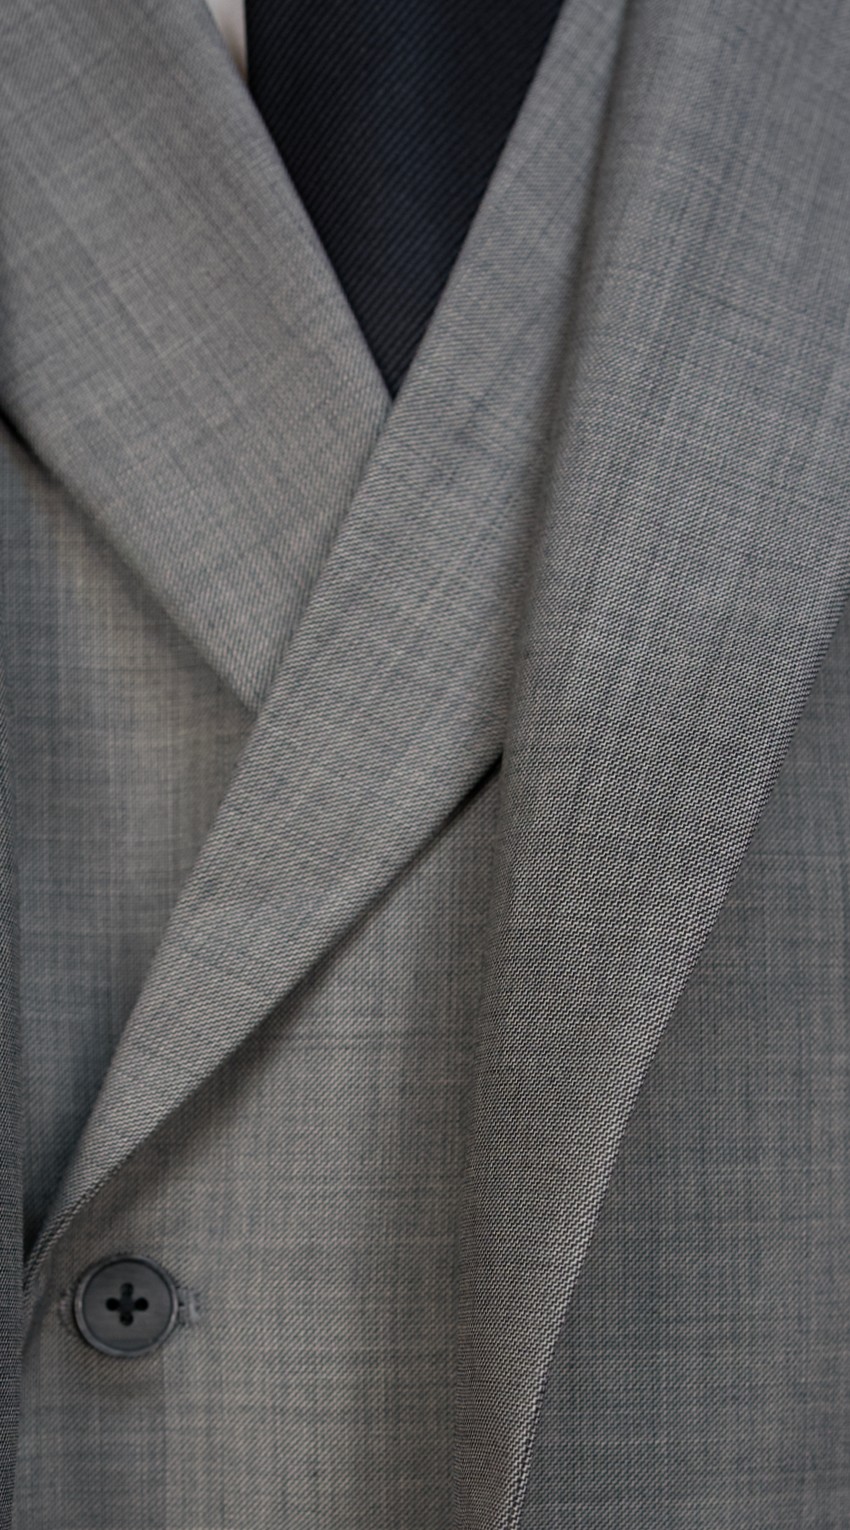 Smoky Gray Wool Suit